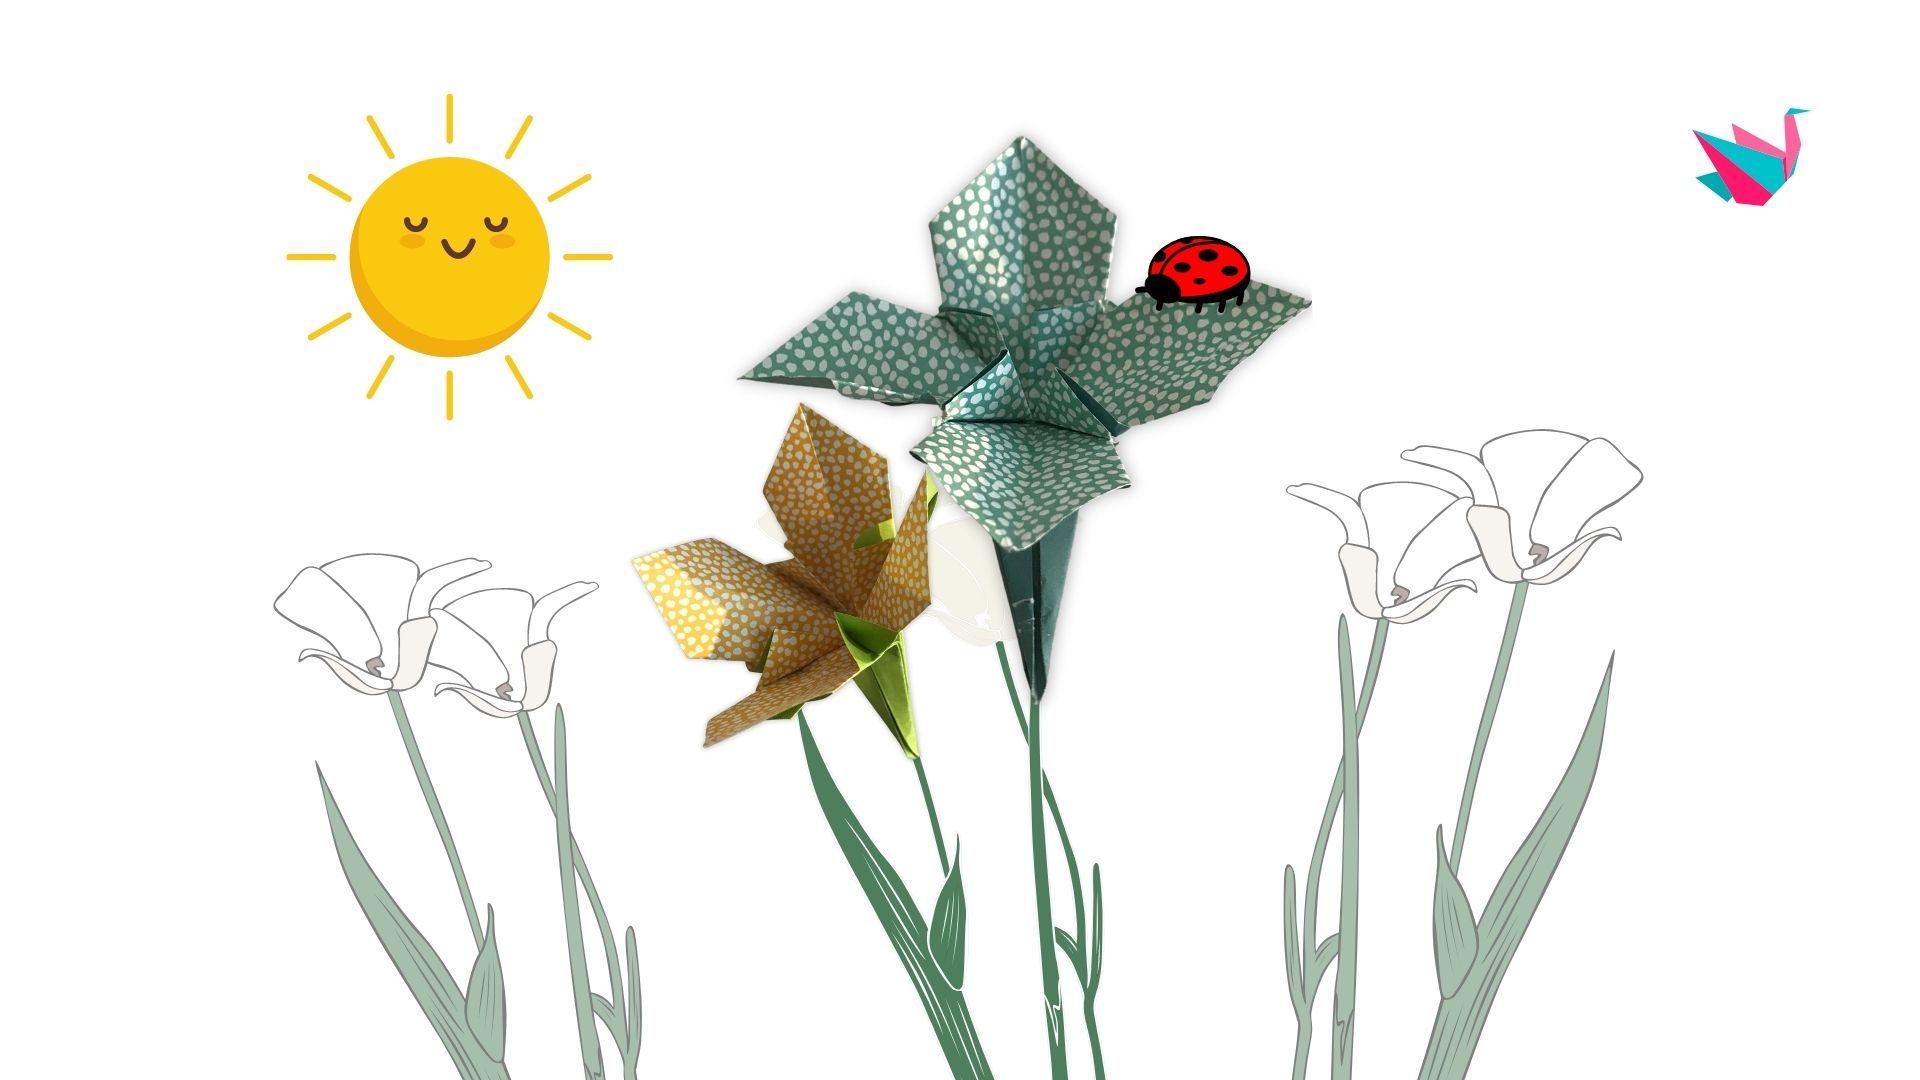 Origami fleur de lys - Fleur de lys en origami